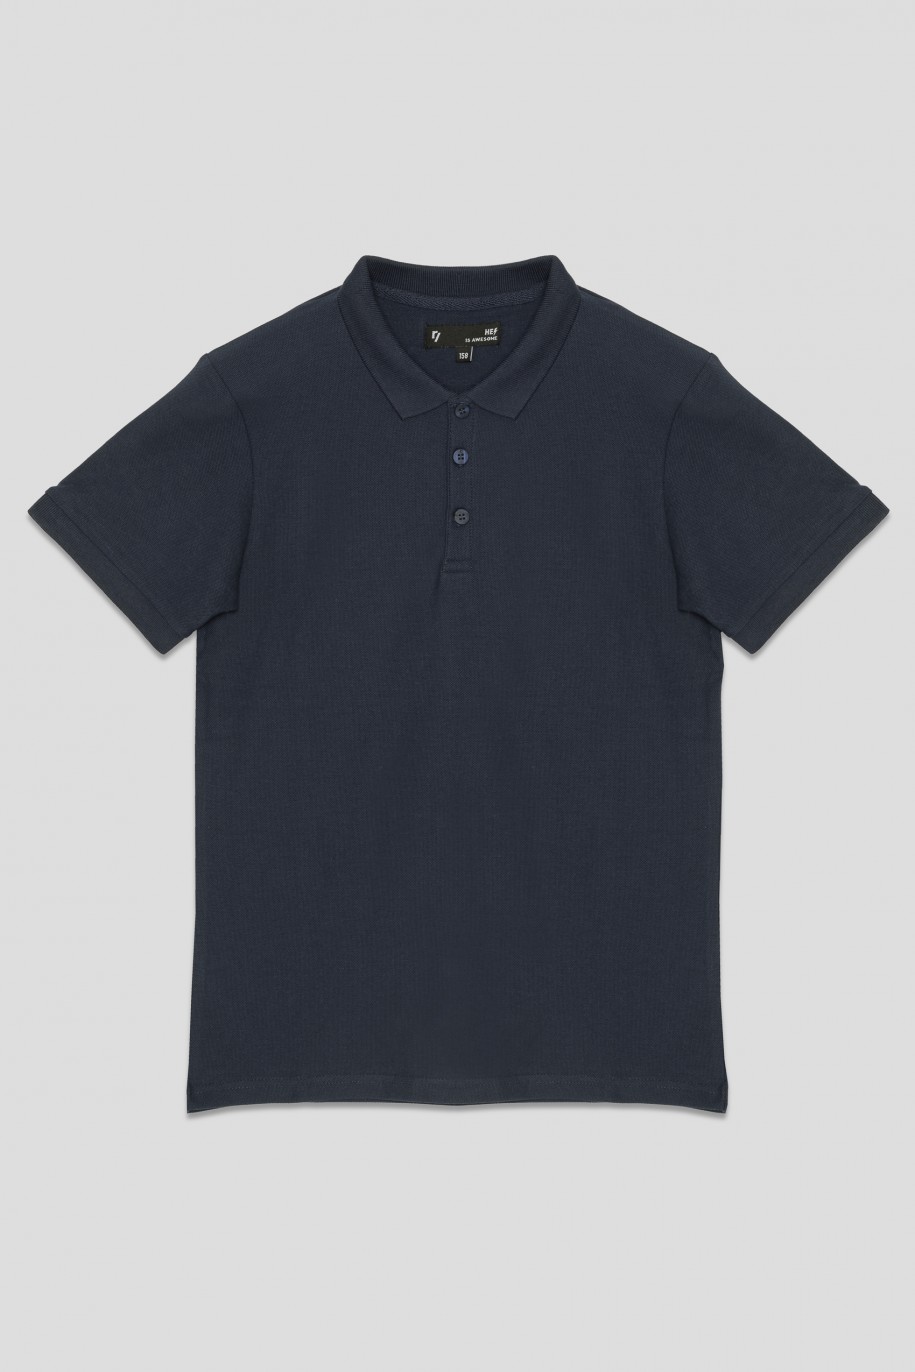 Granatowa gładka koszulka polo - 36631